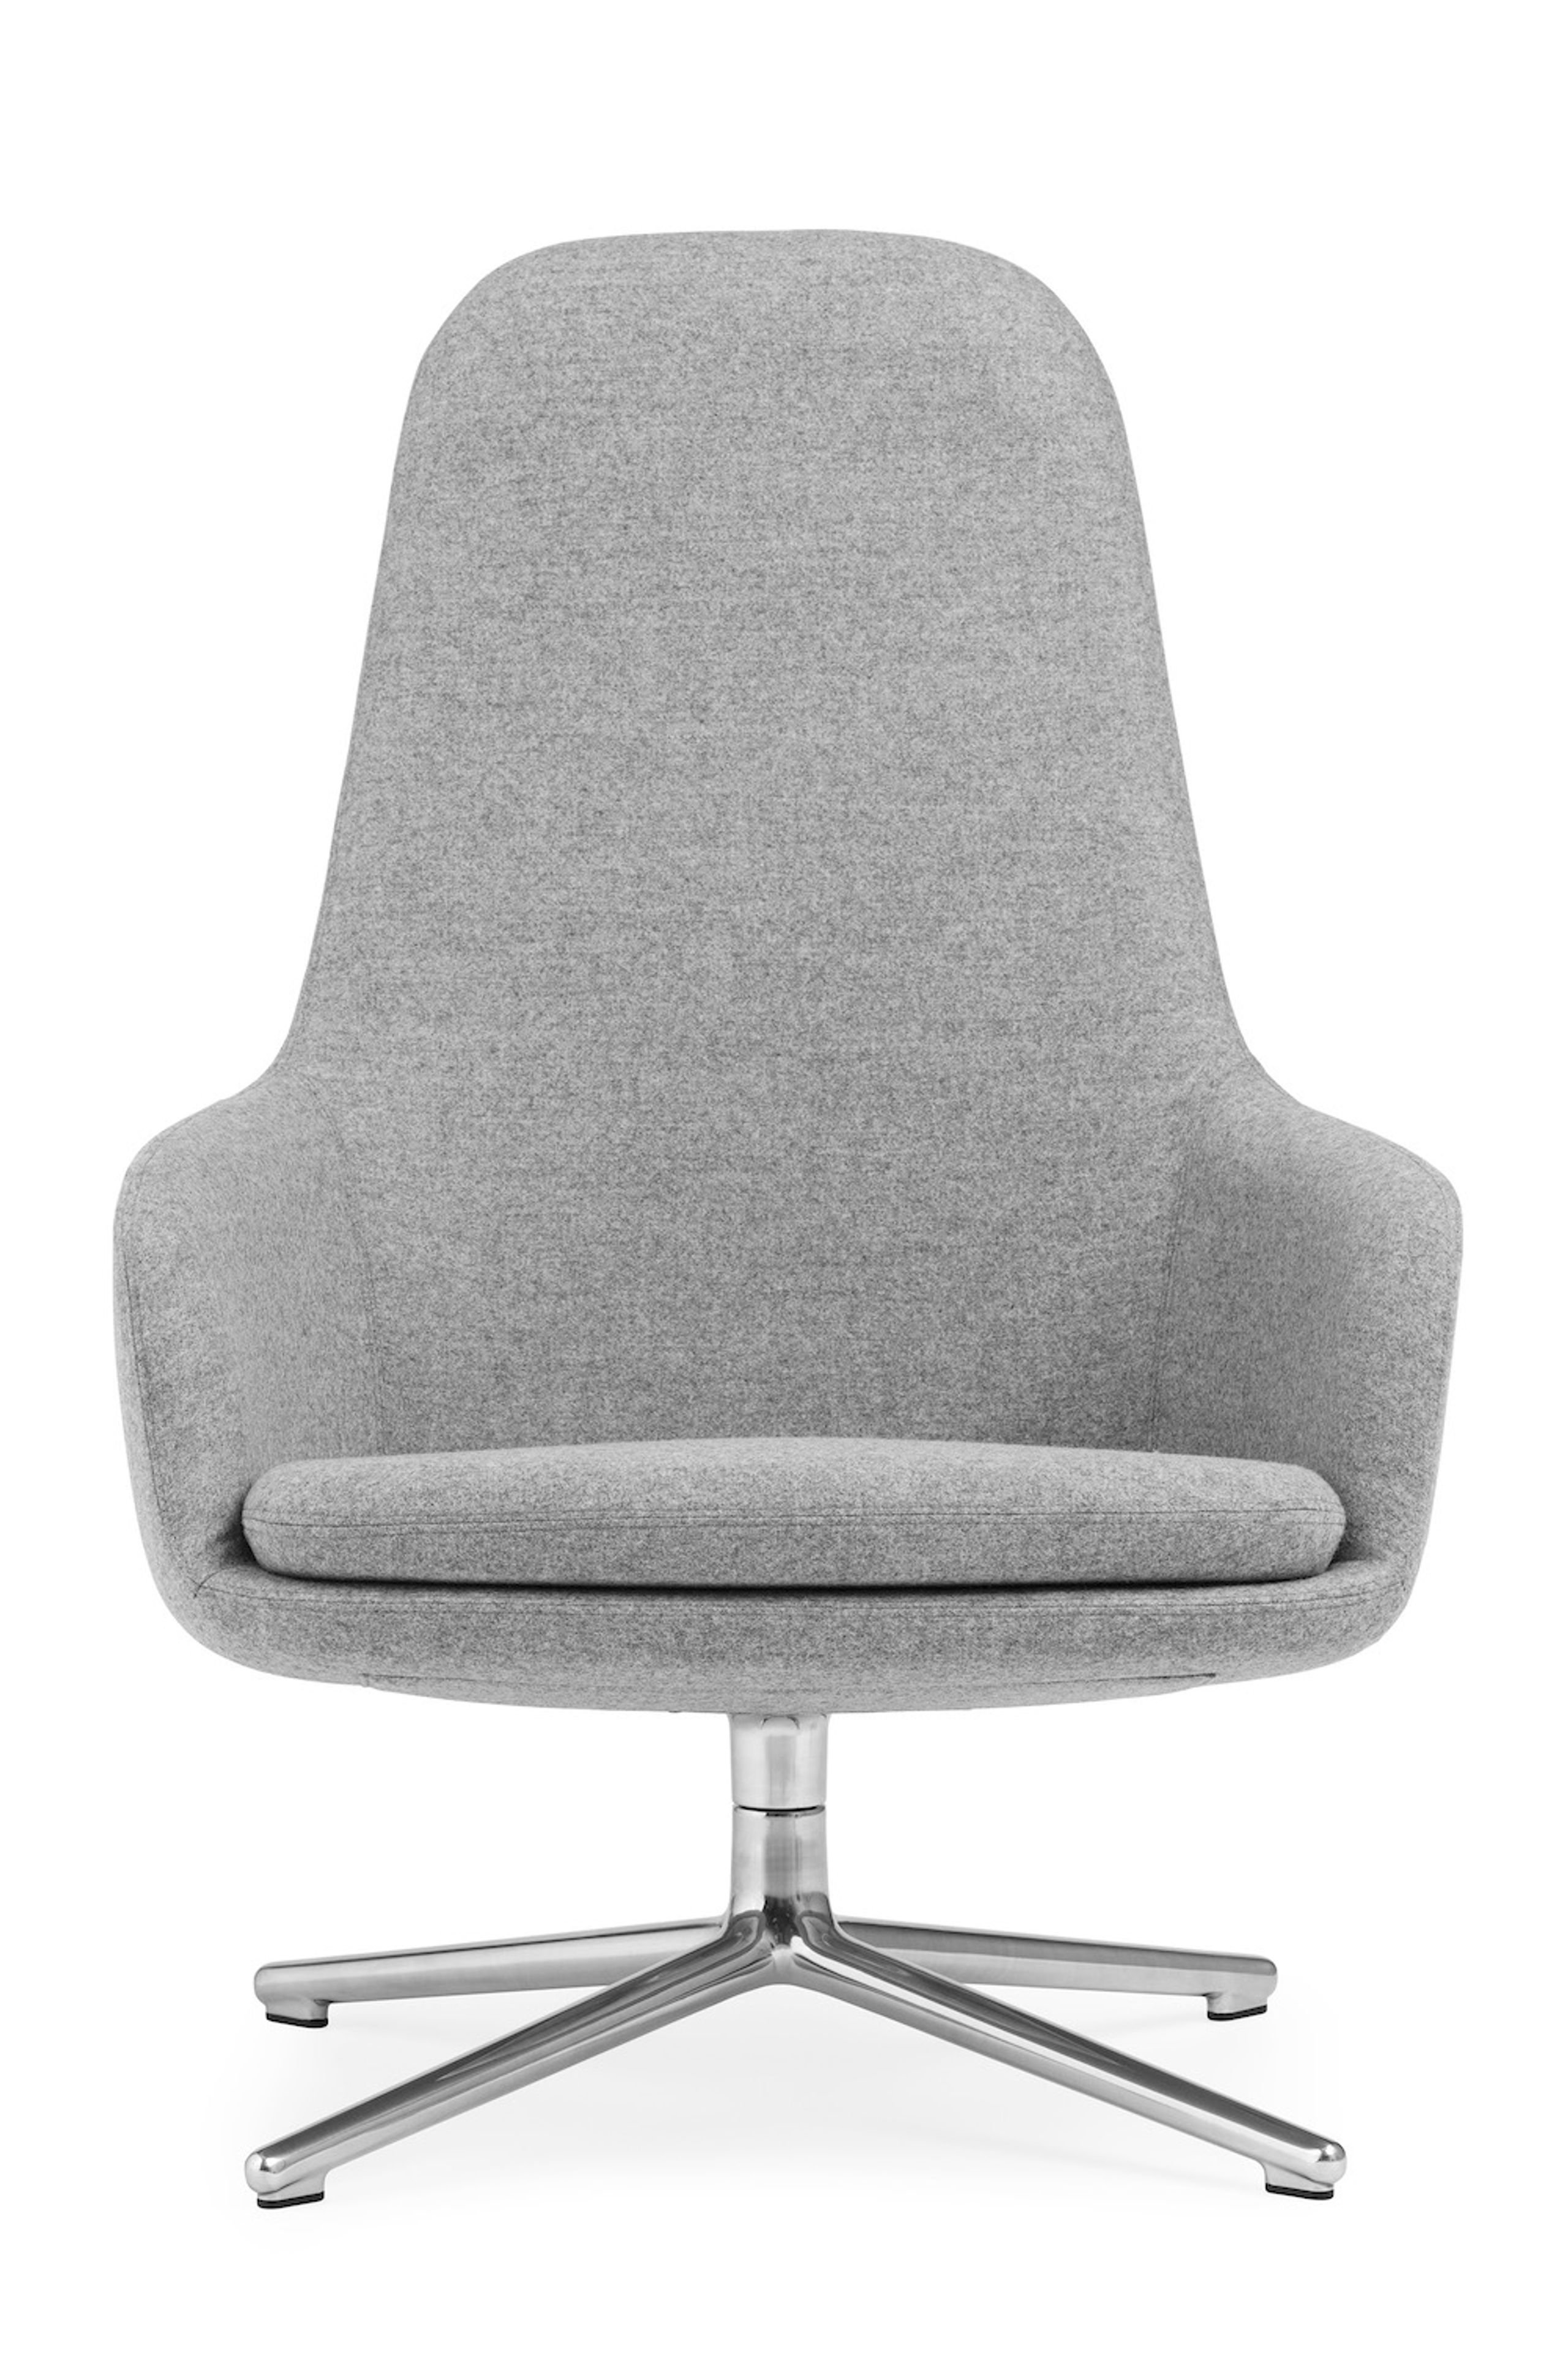 Normann Copenhagen - Lænestol - Era Lounge Chair Høj Drejestel - Aluminium Stel / Synergy